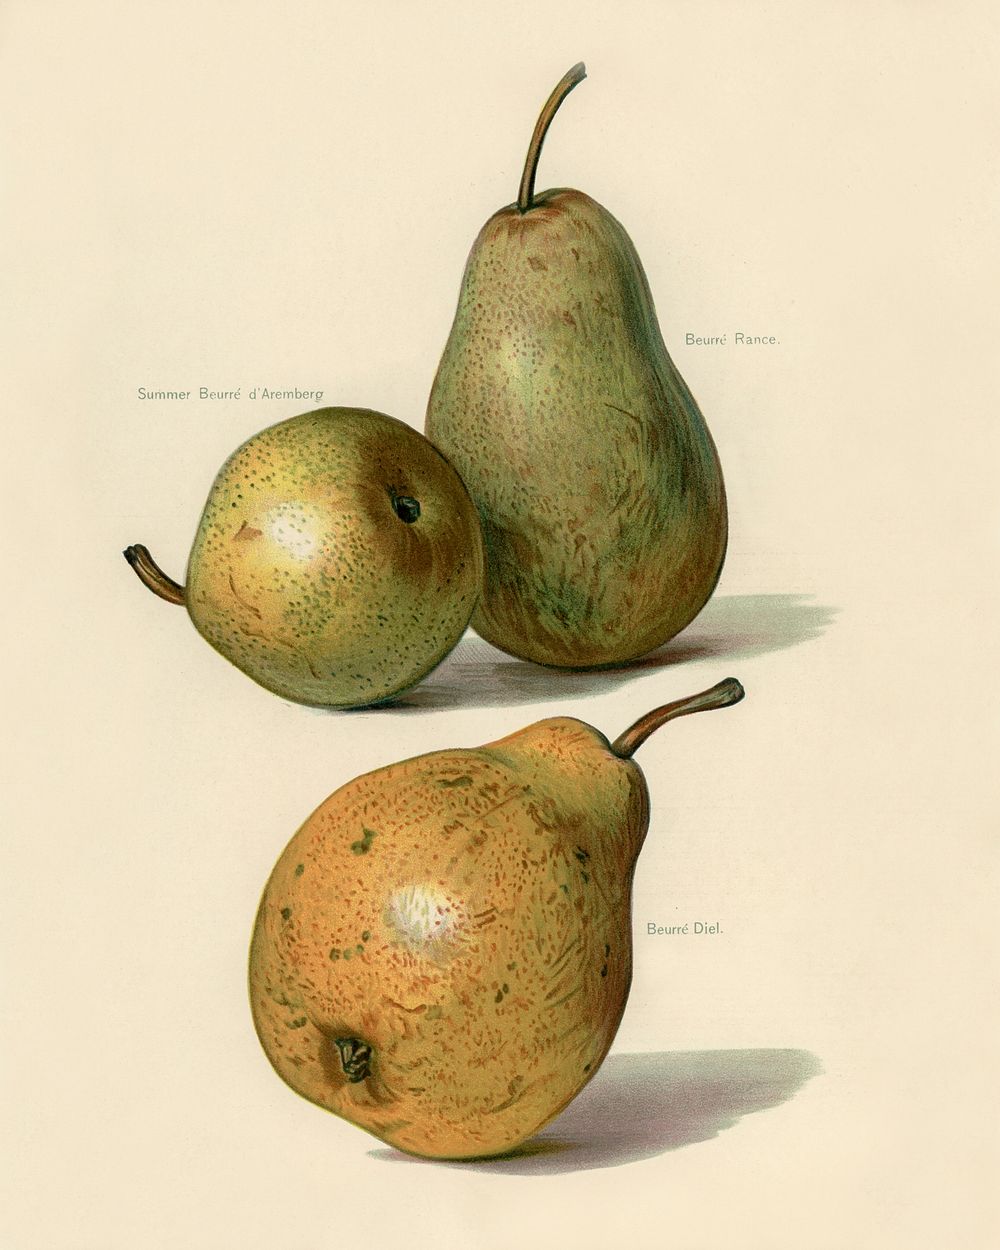 Vintage illustration of beurre dance, beurre diel, summer beurre d' aremberg pears digitally enhanced from our own vintage…